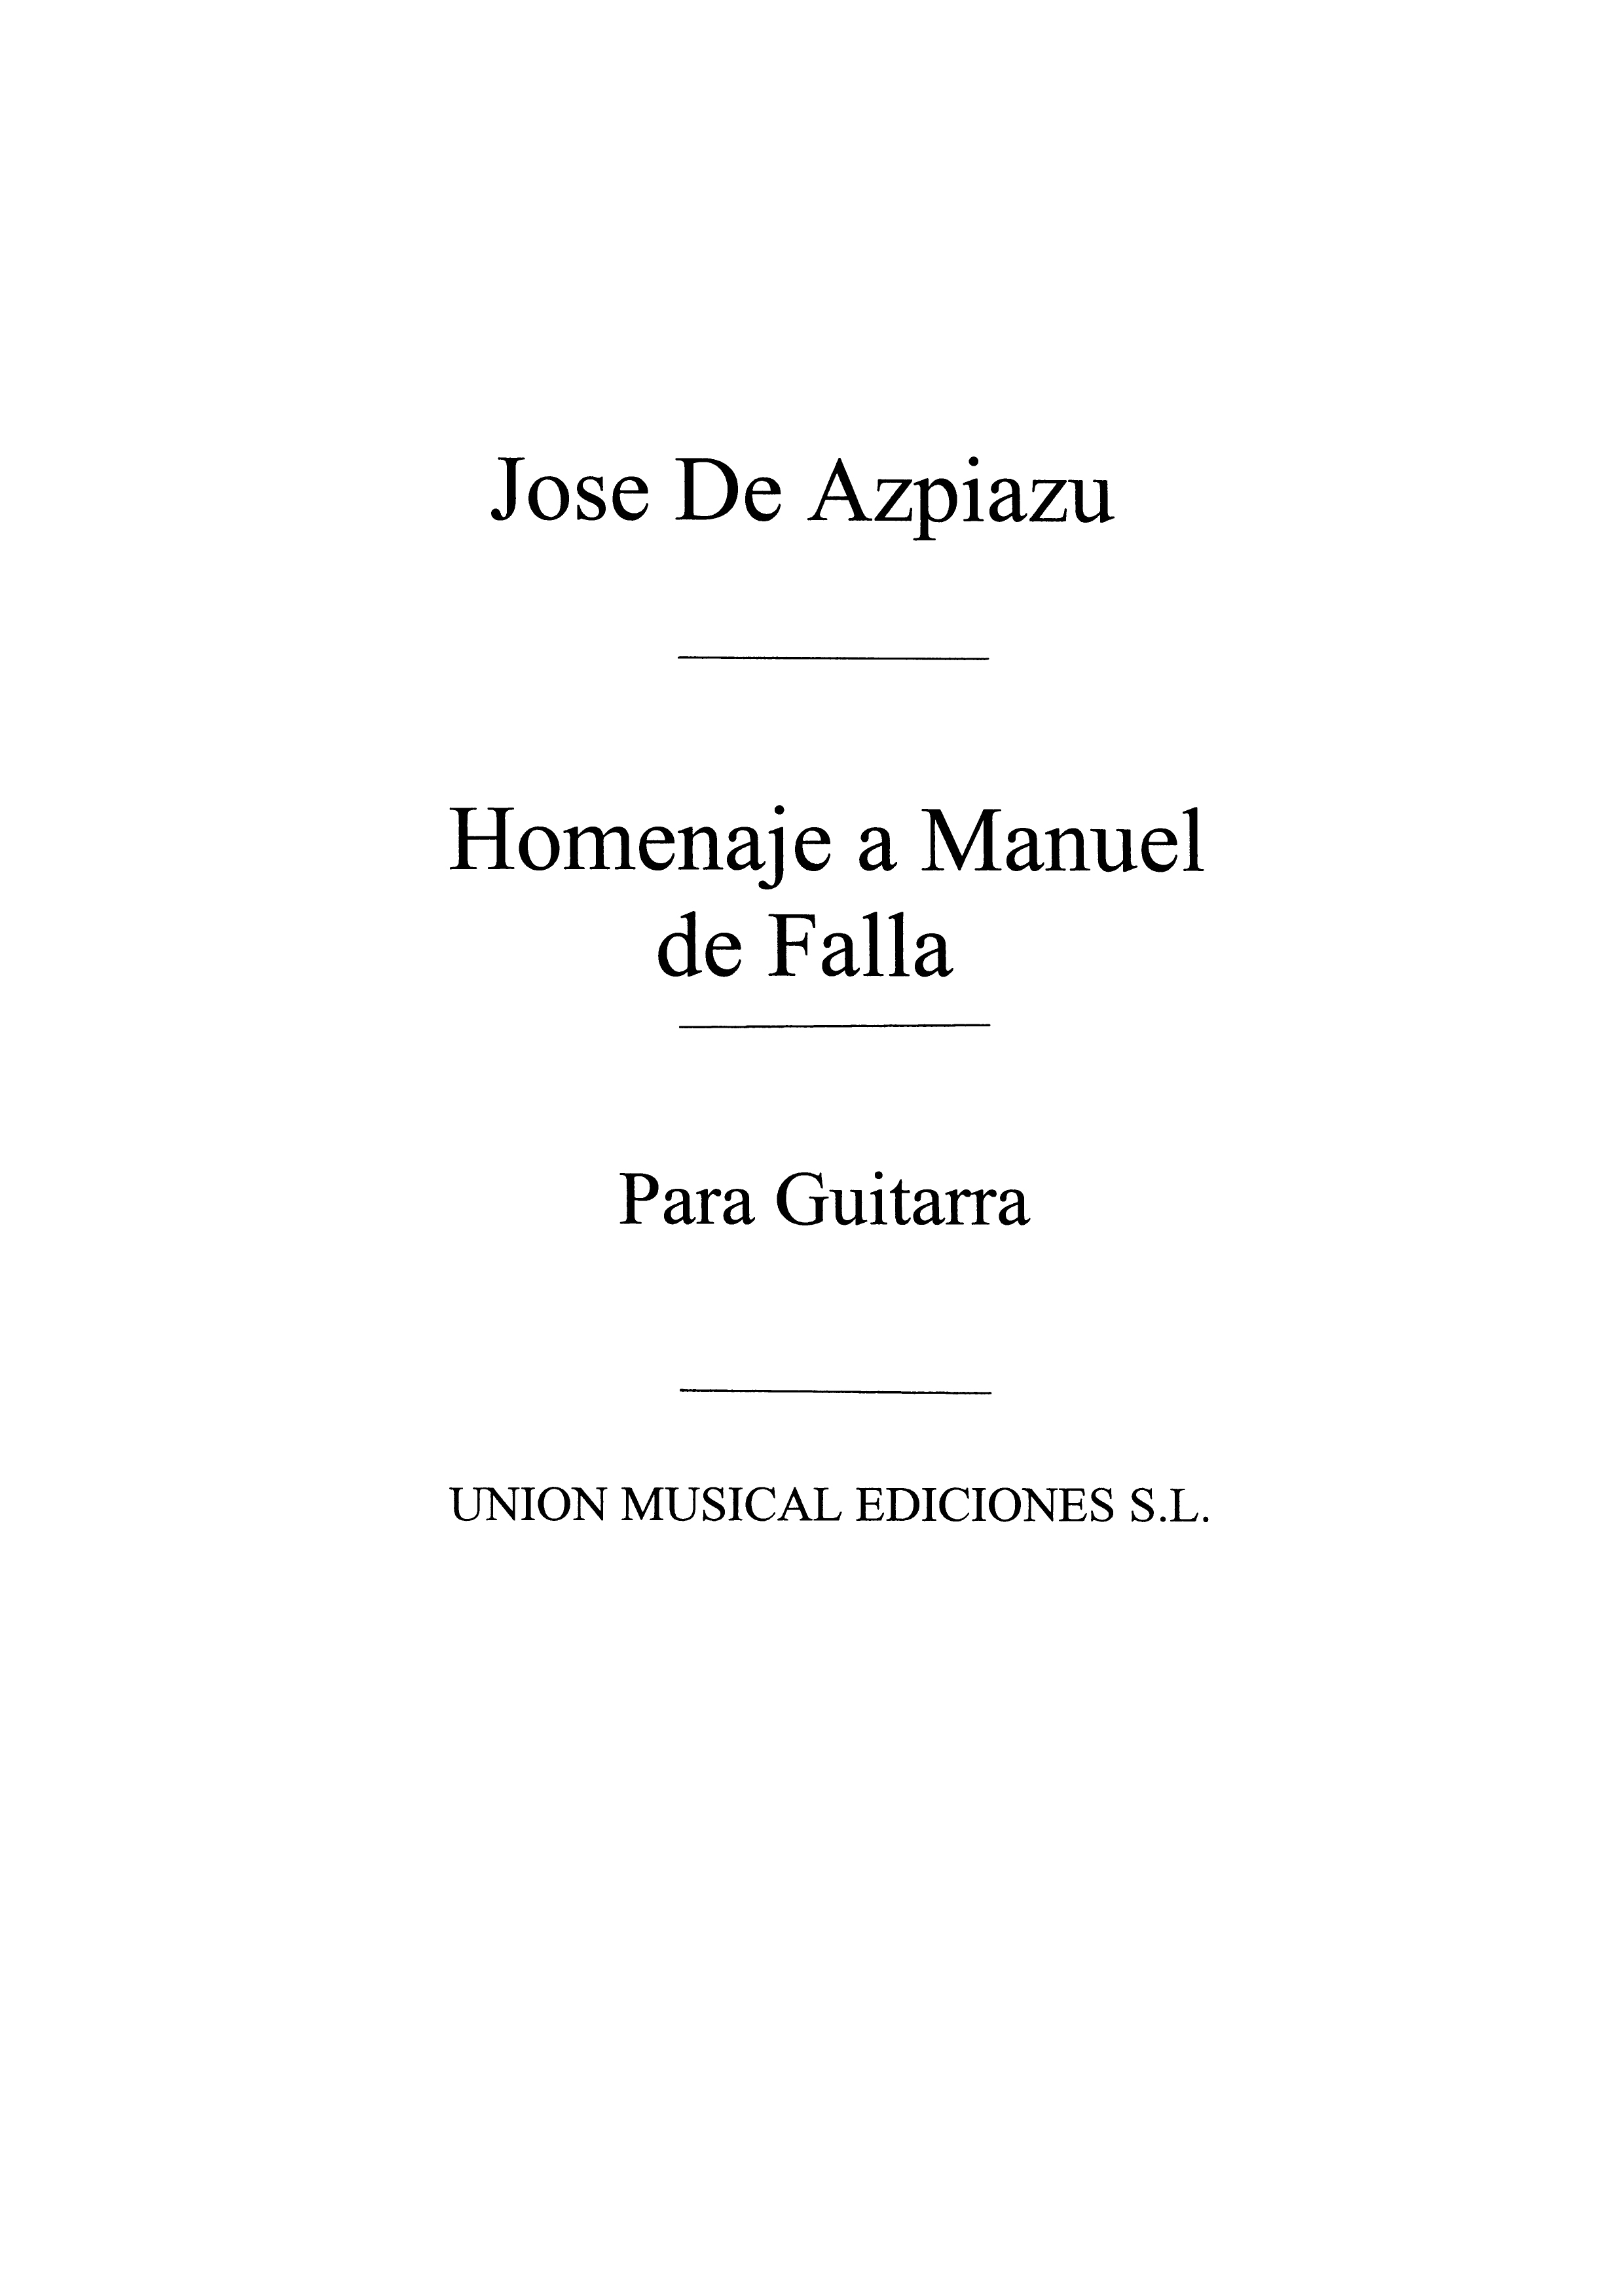 José de Azpiazu: Homenaje A Manuel De Falla For: Voice: Instrumental Work